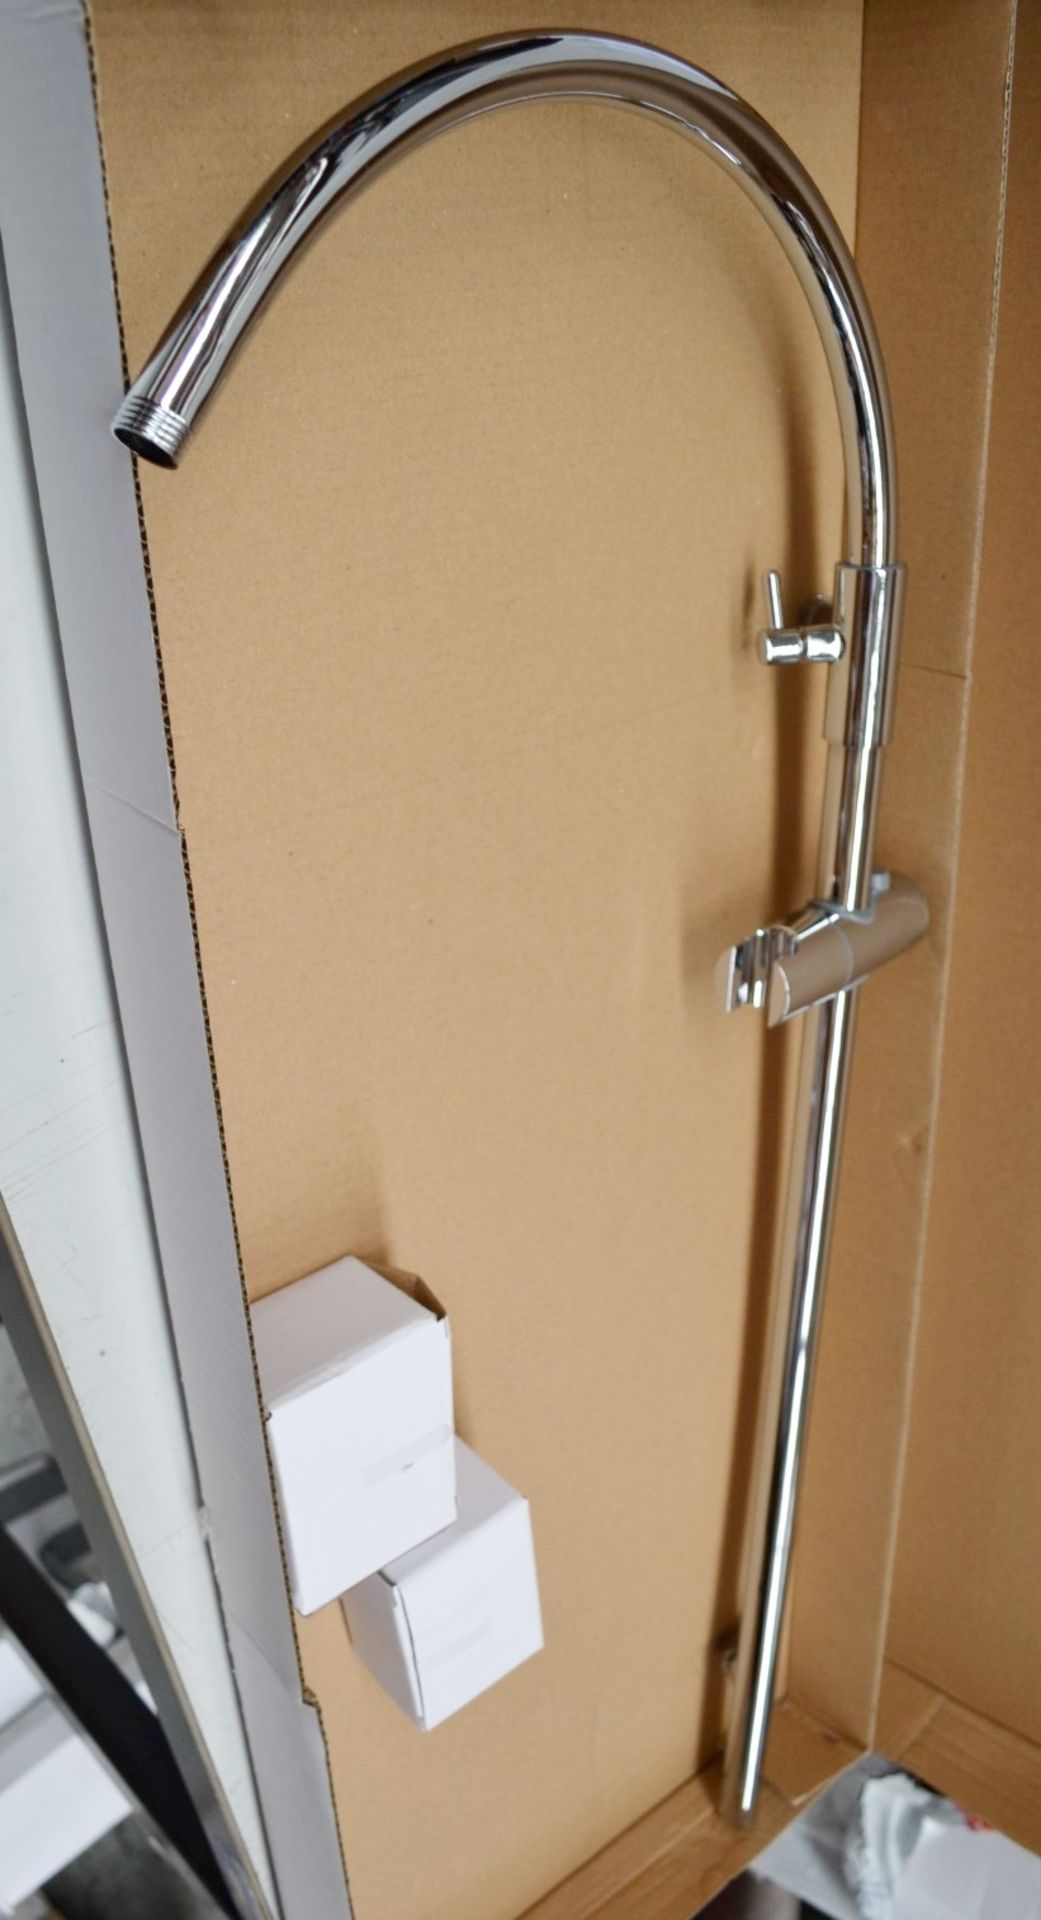 1 x Bathroom Riser Rail (Model S205-1) - Chrome Finish - Ref: MBI011 - CL190 - Unused Boxed